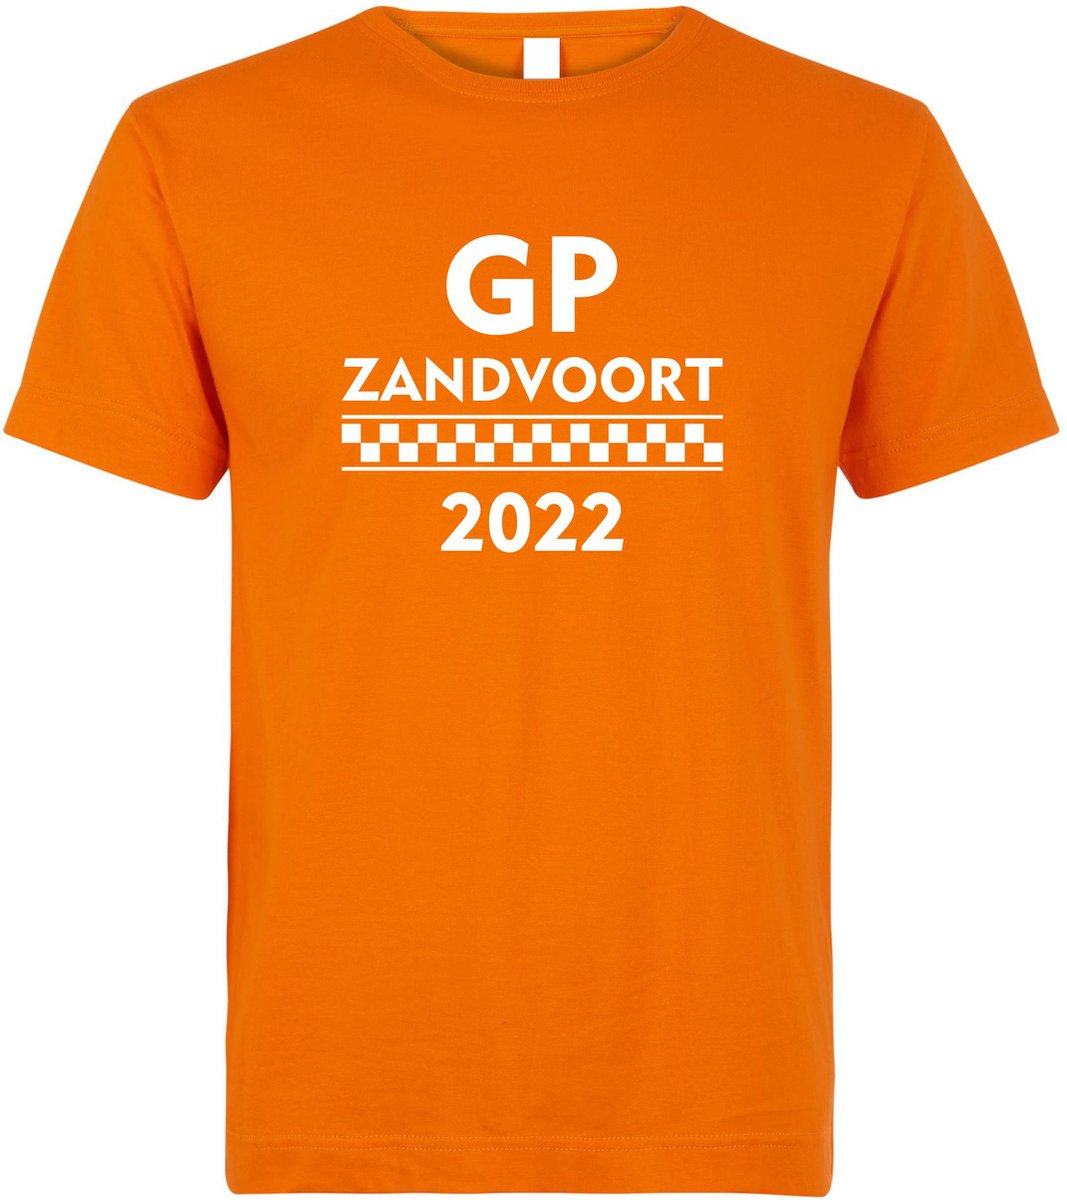 T-shirt GP Zandvoort 2022 | Max Verstappen / Red Bull Racing / Formule 1 fan | Grand Prix Circuit Zandvoort | kleding shirt | Oranje | maat XL